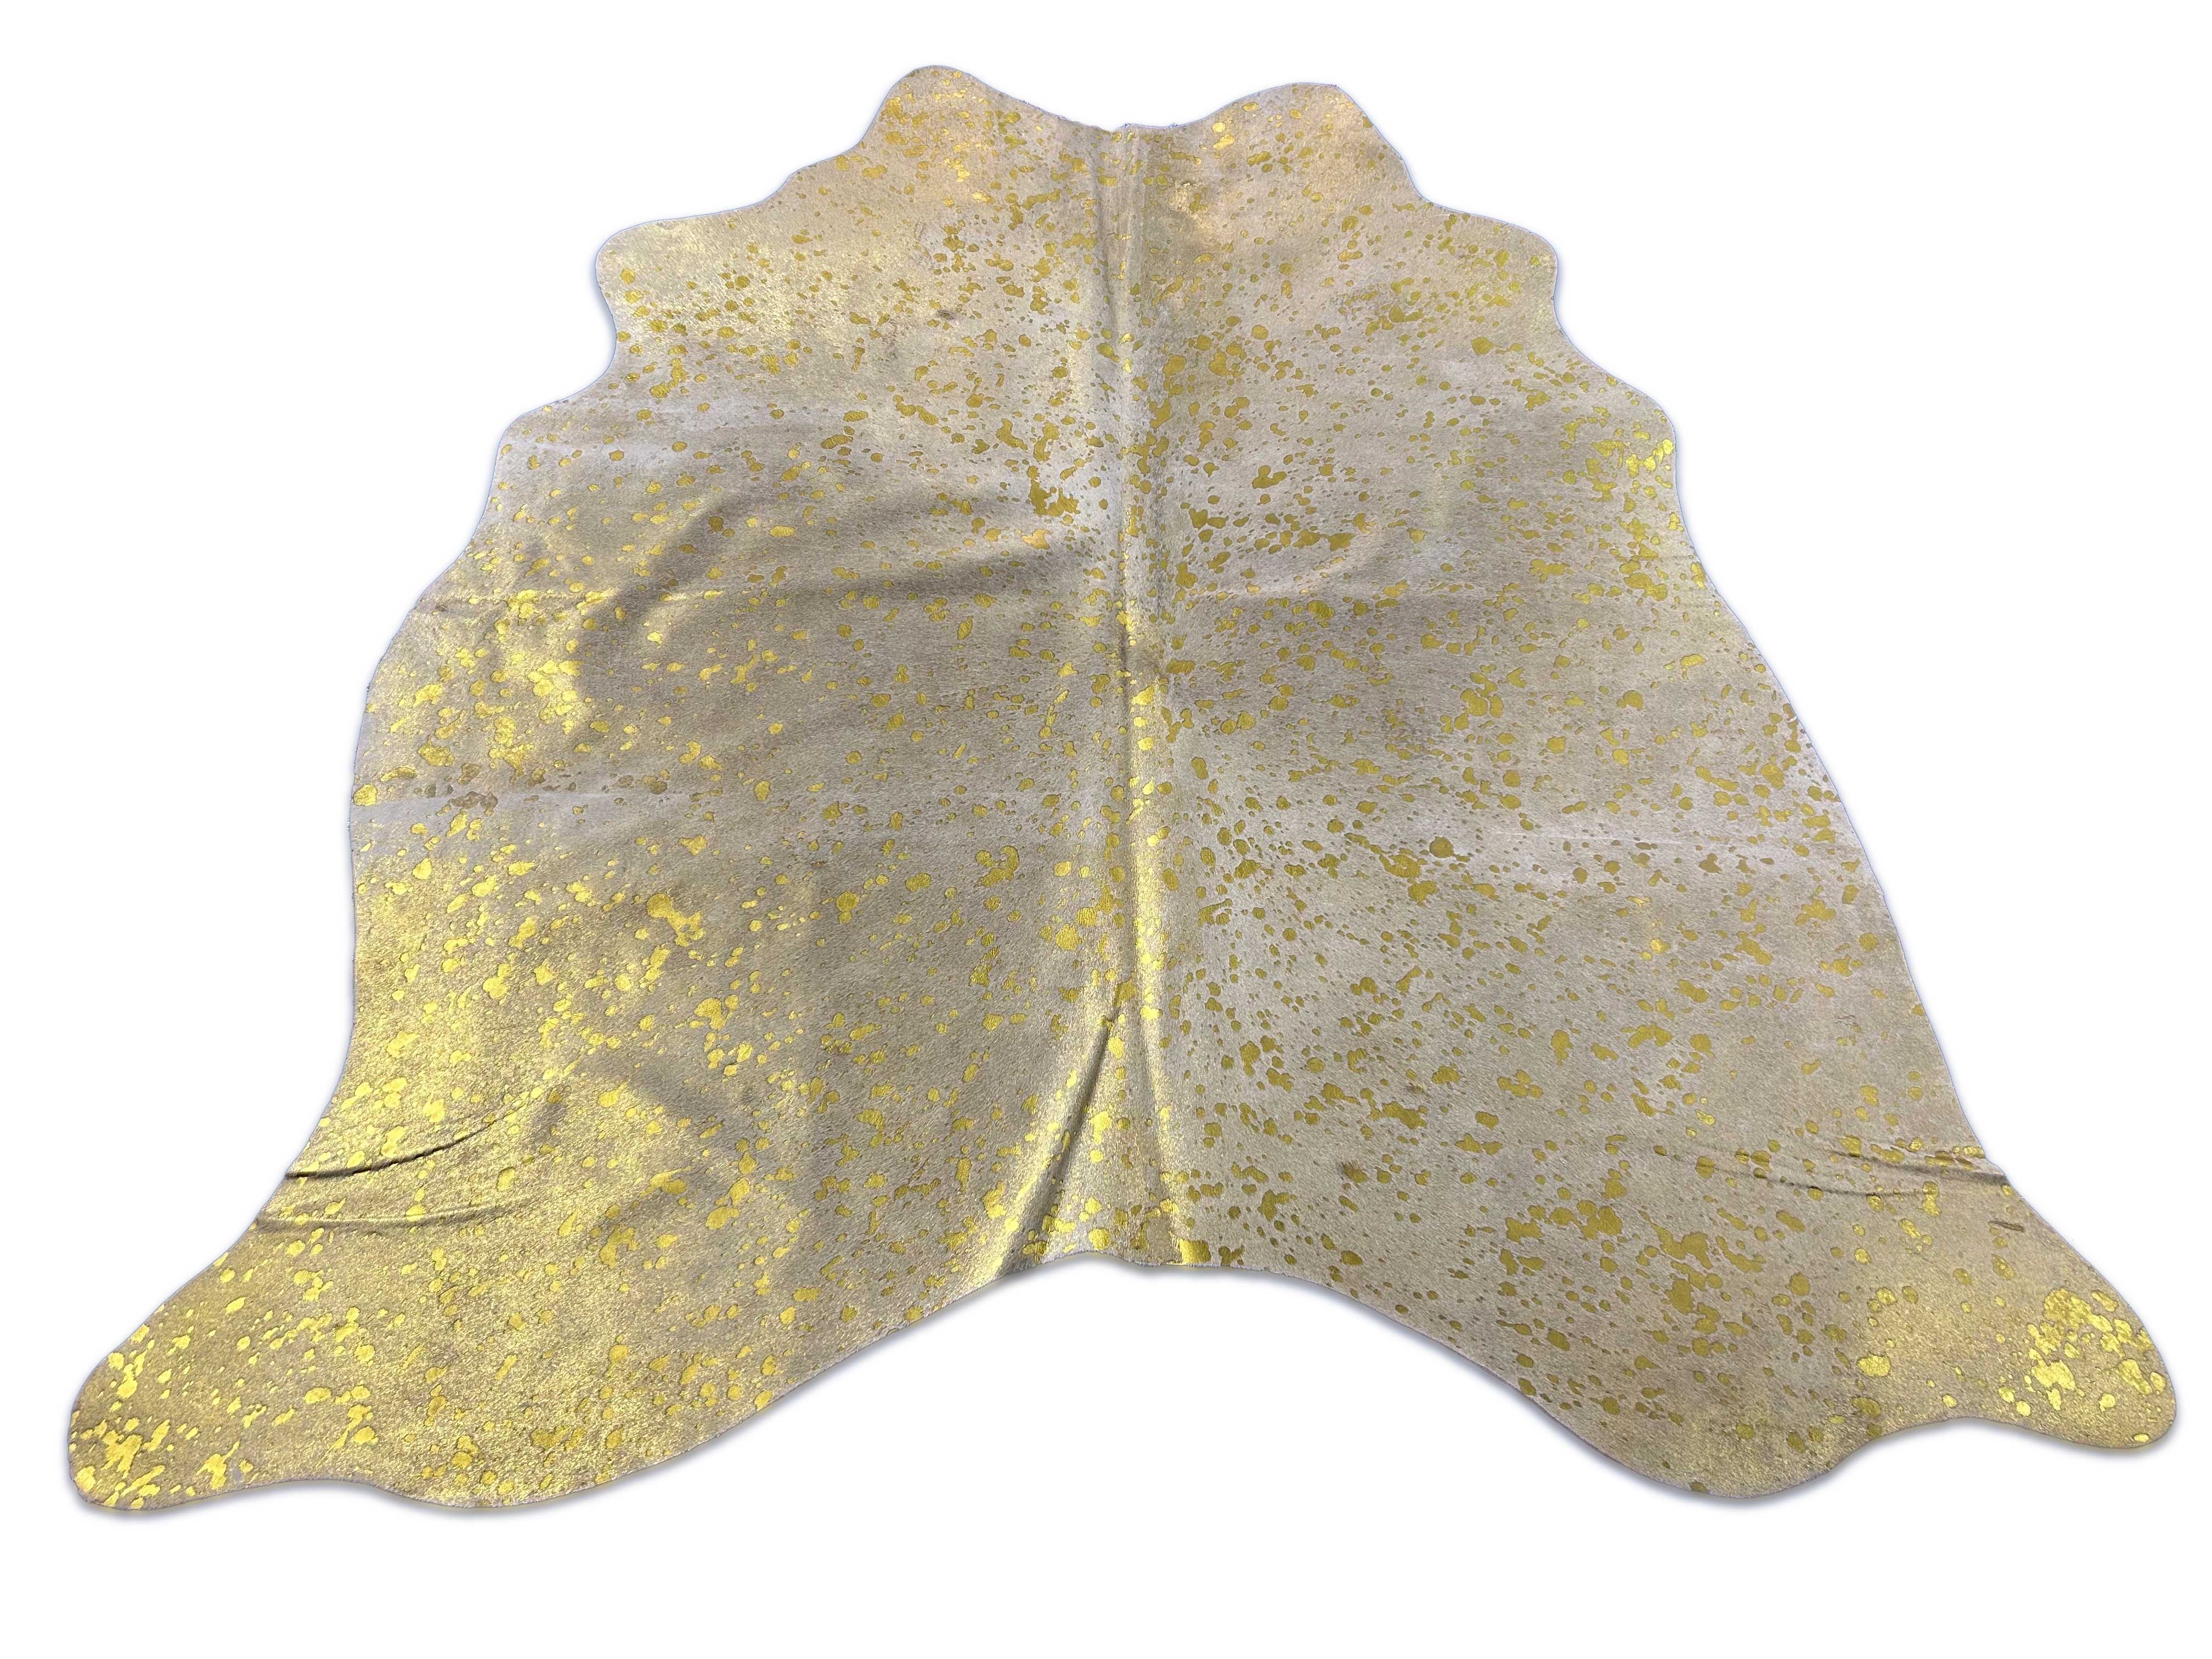 Small Gold Metallic Cowhide Rug Size: 5x5.2 feet M-1633